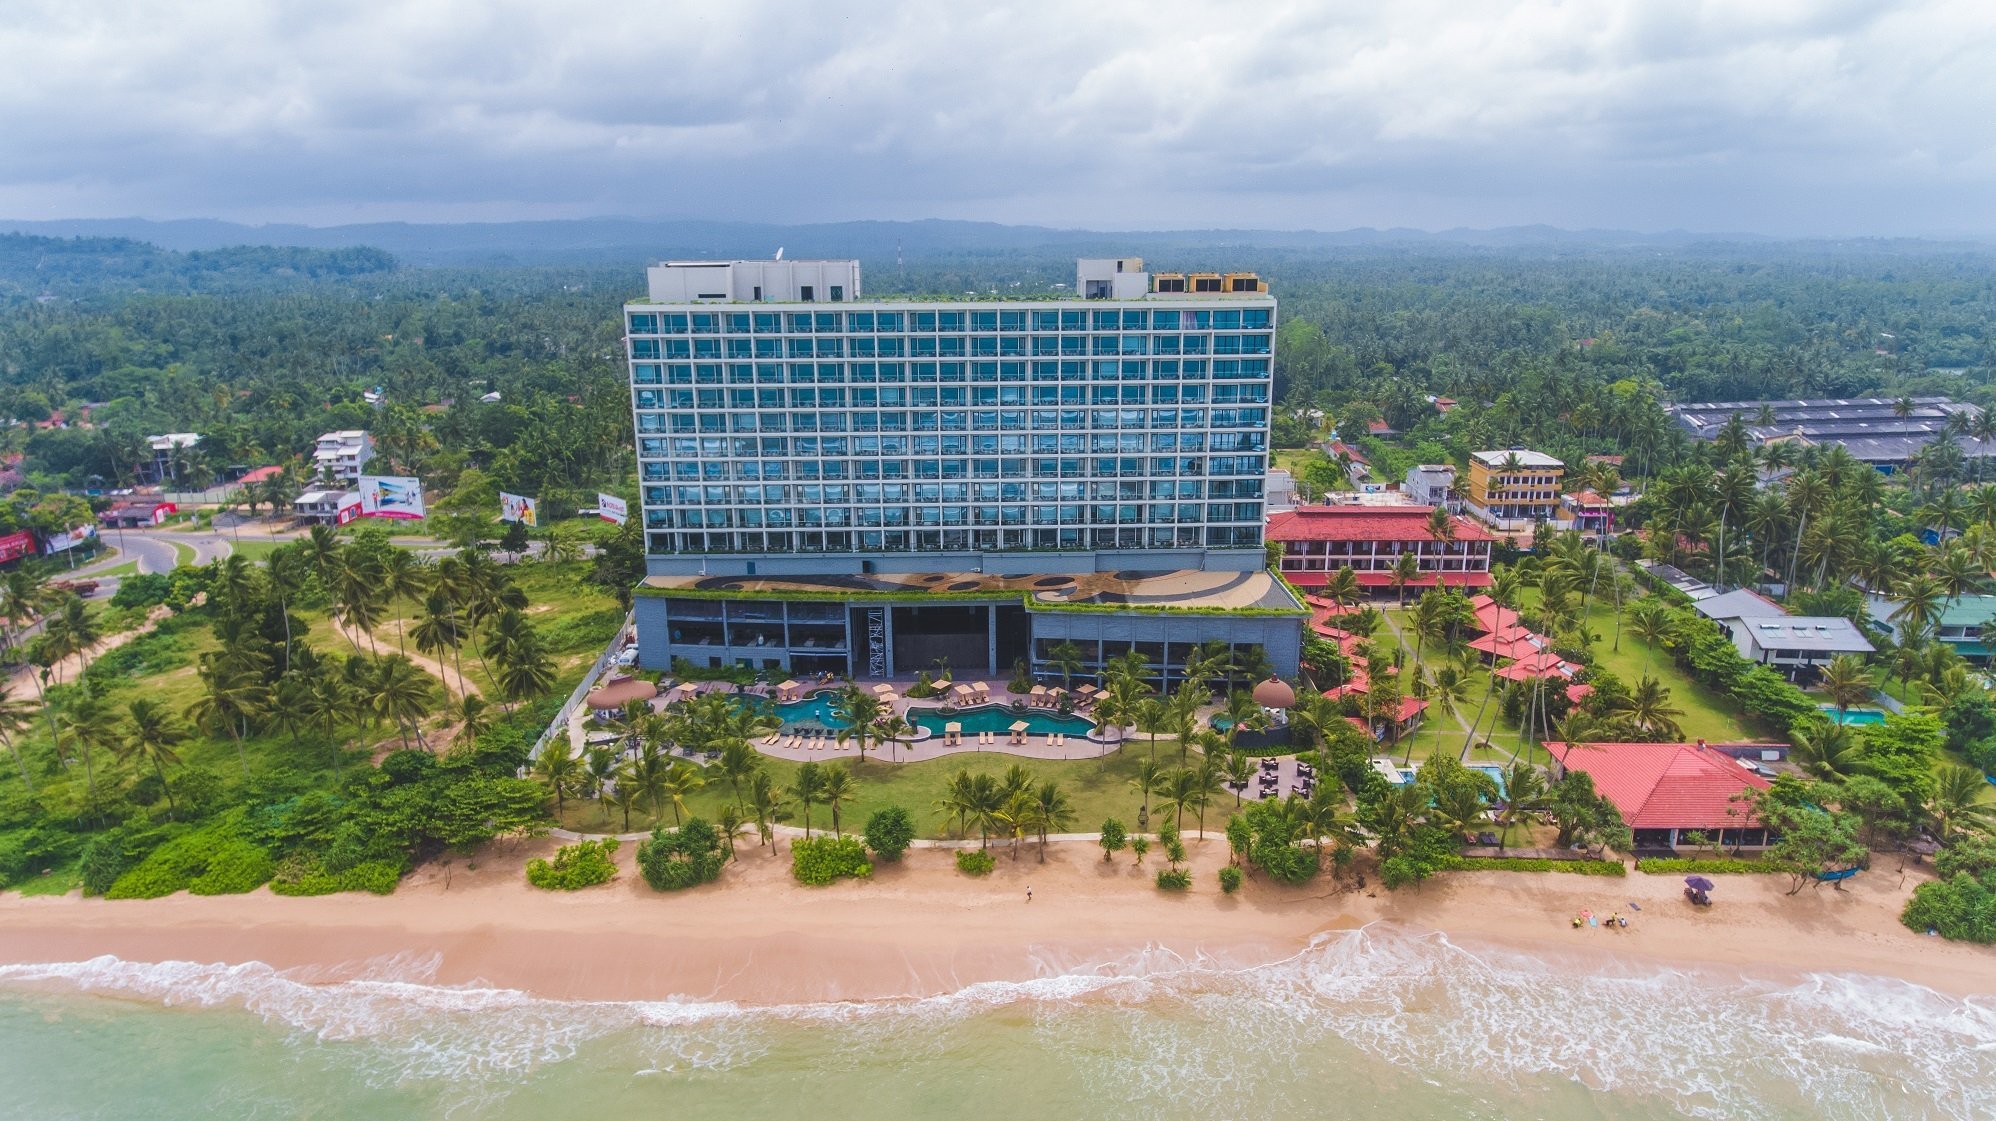 Photo of The Weligama Bay Marriott Resort & Spa, Weligama, Sri Lanka